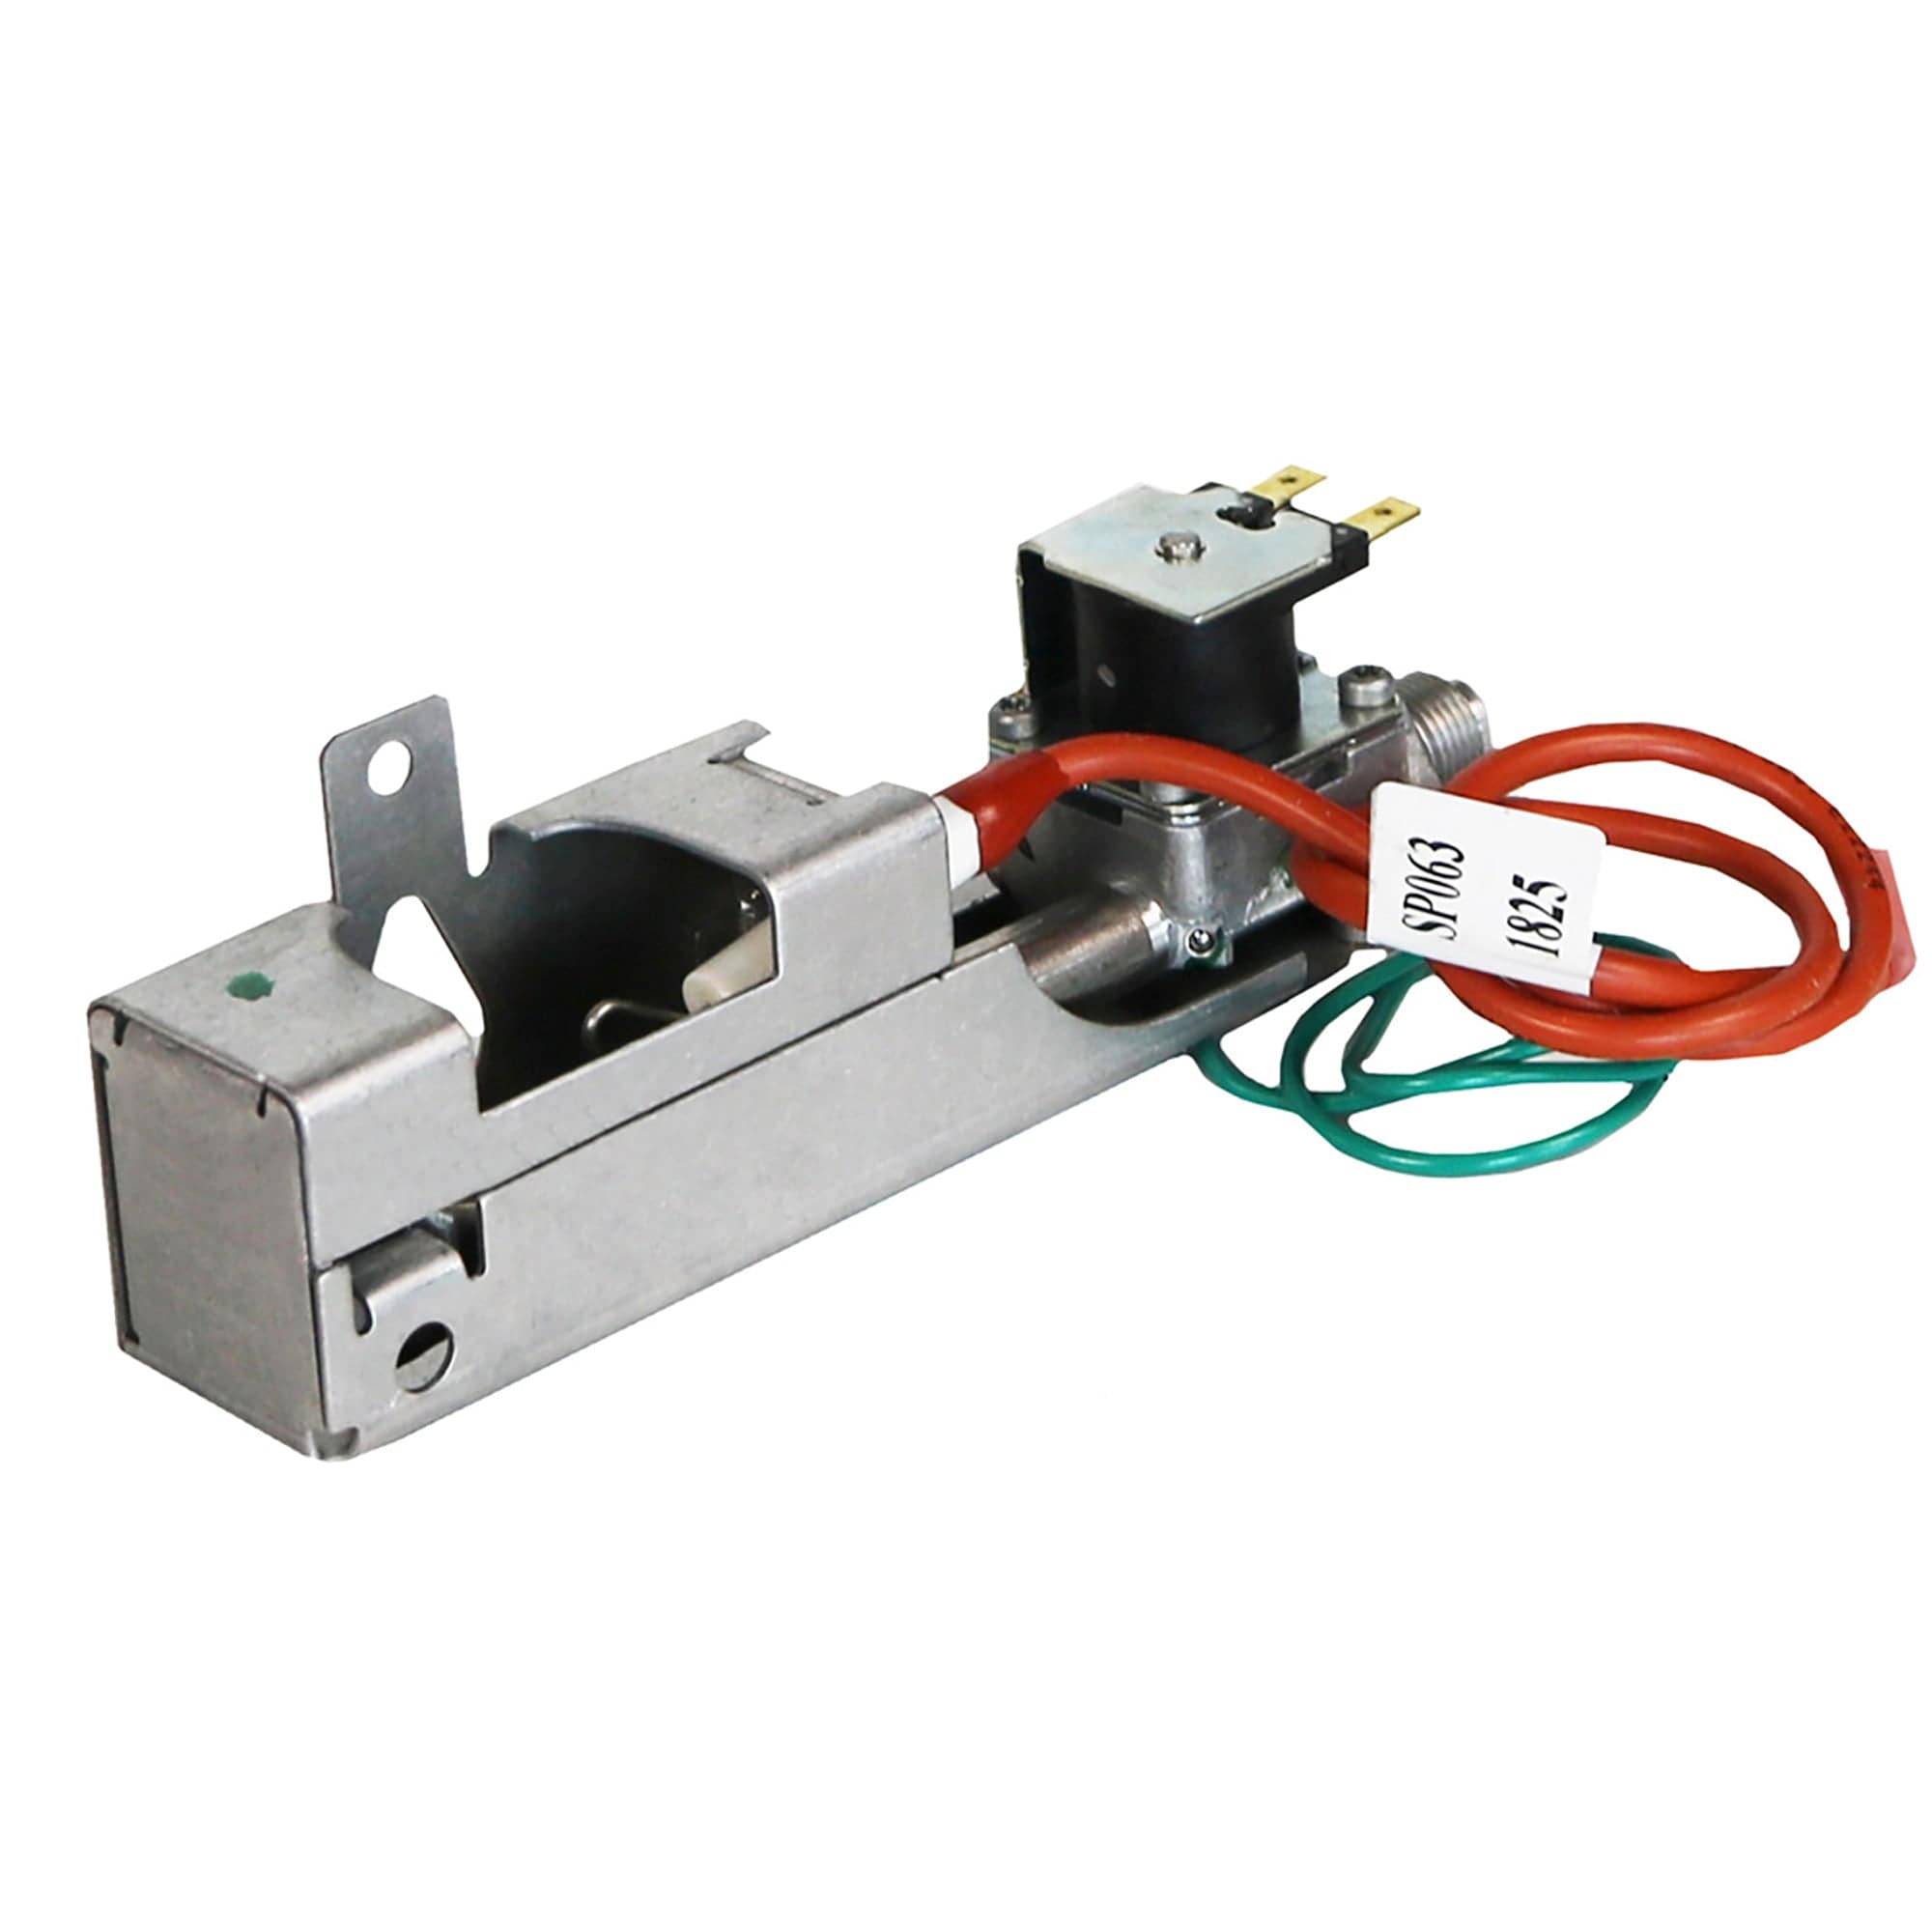 Refrigerator Gas Train Control Valve Assembly Kit - Thetford 639572